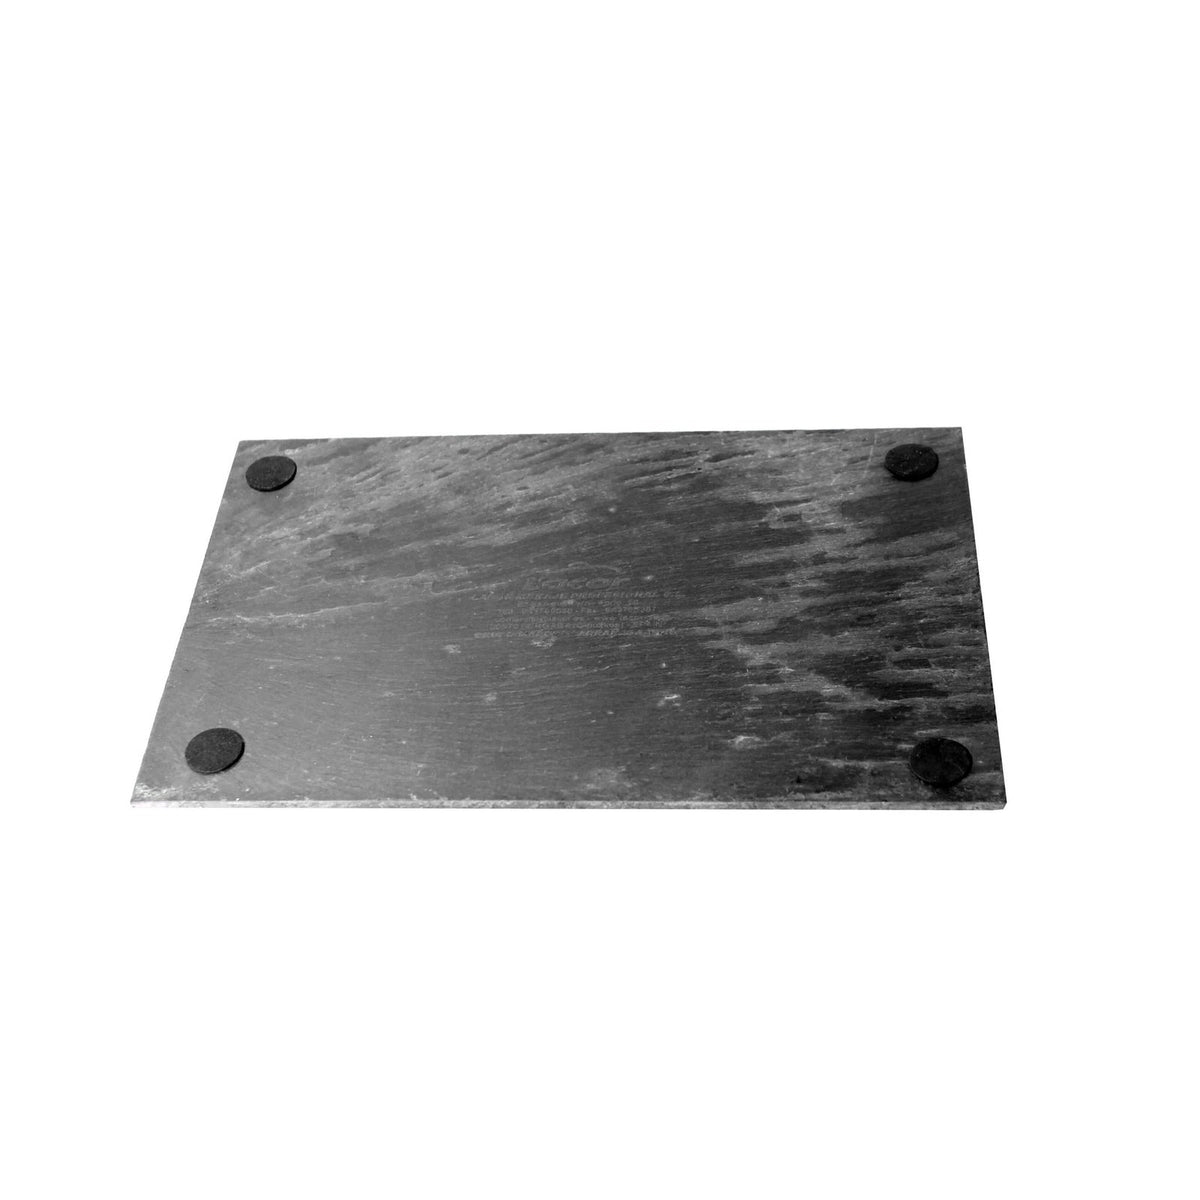 Lacor Slate Tray, 15 x 20 cm